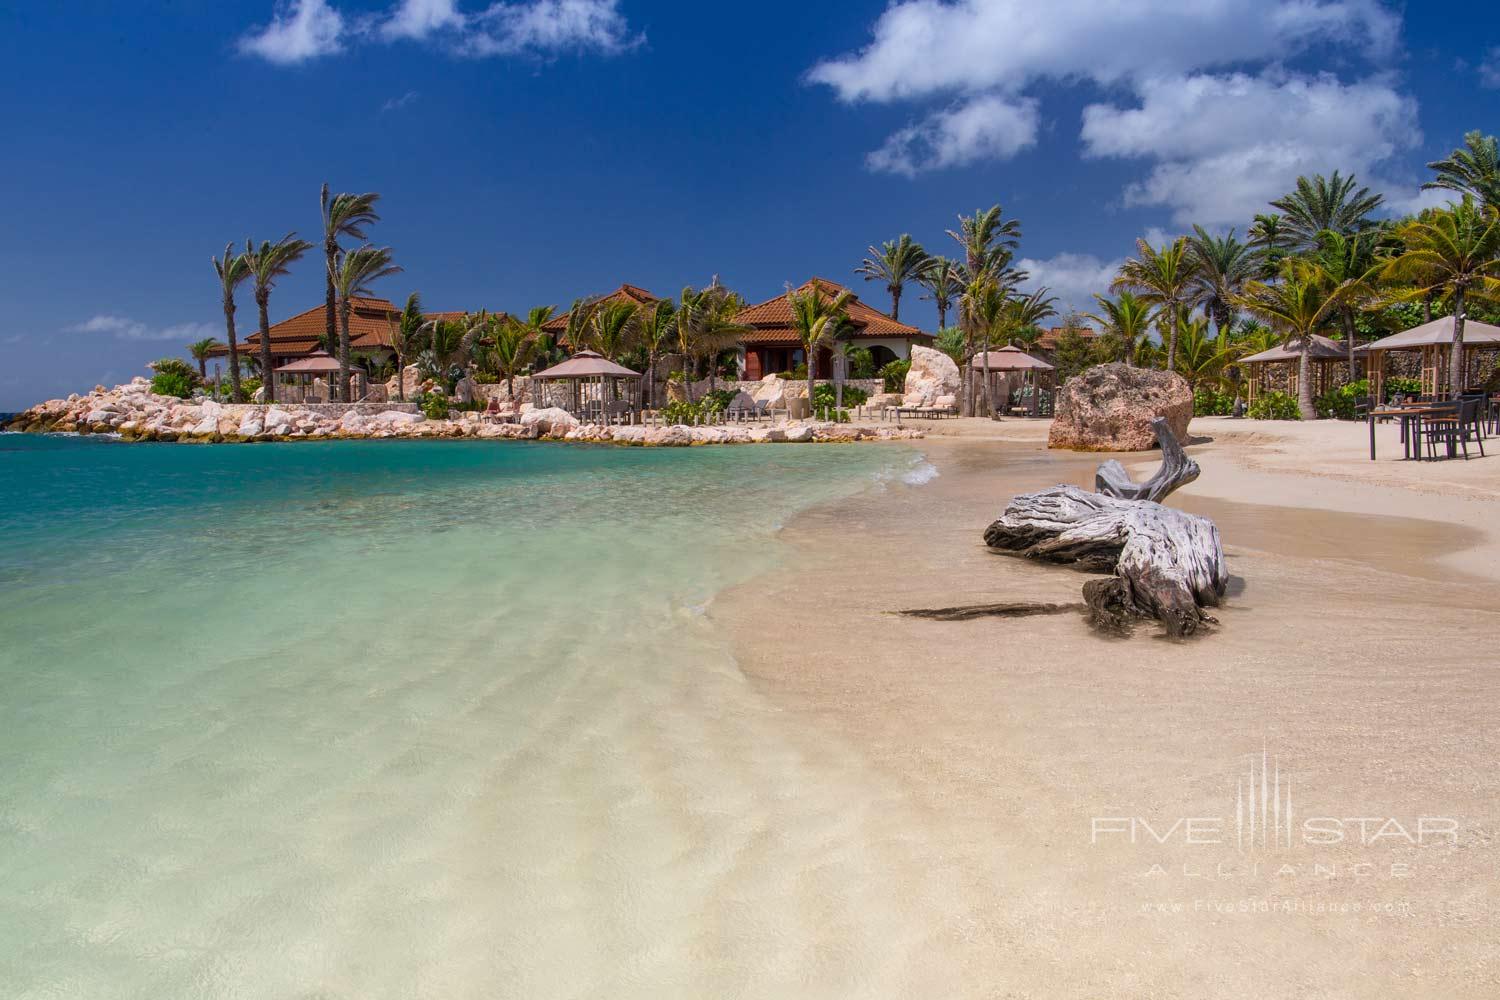 Baoase Luxury Resort Curacao